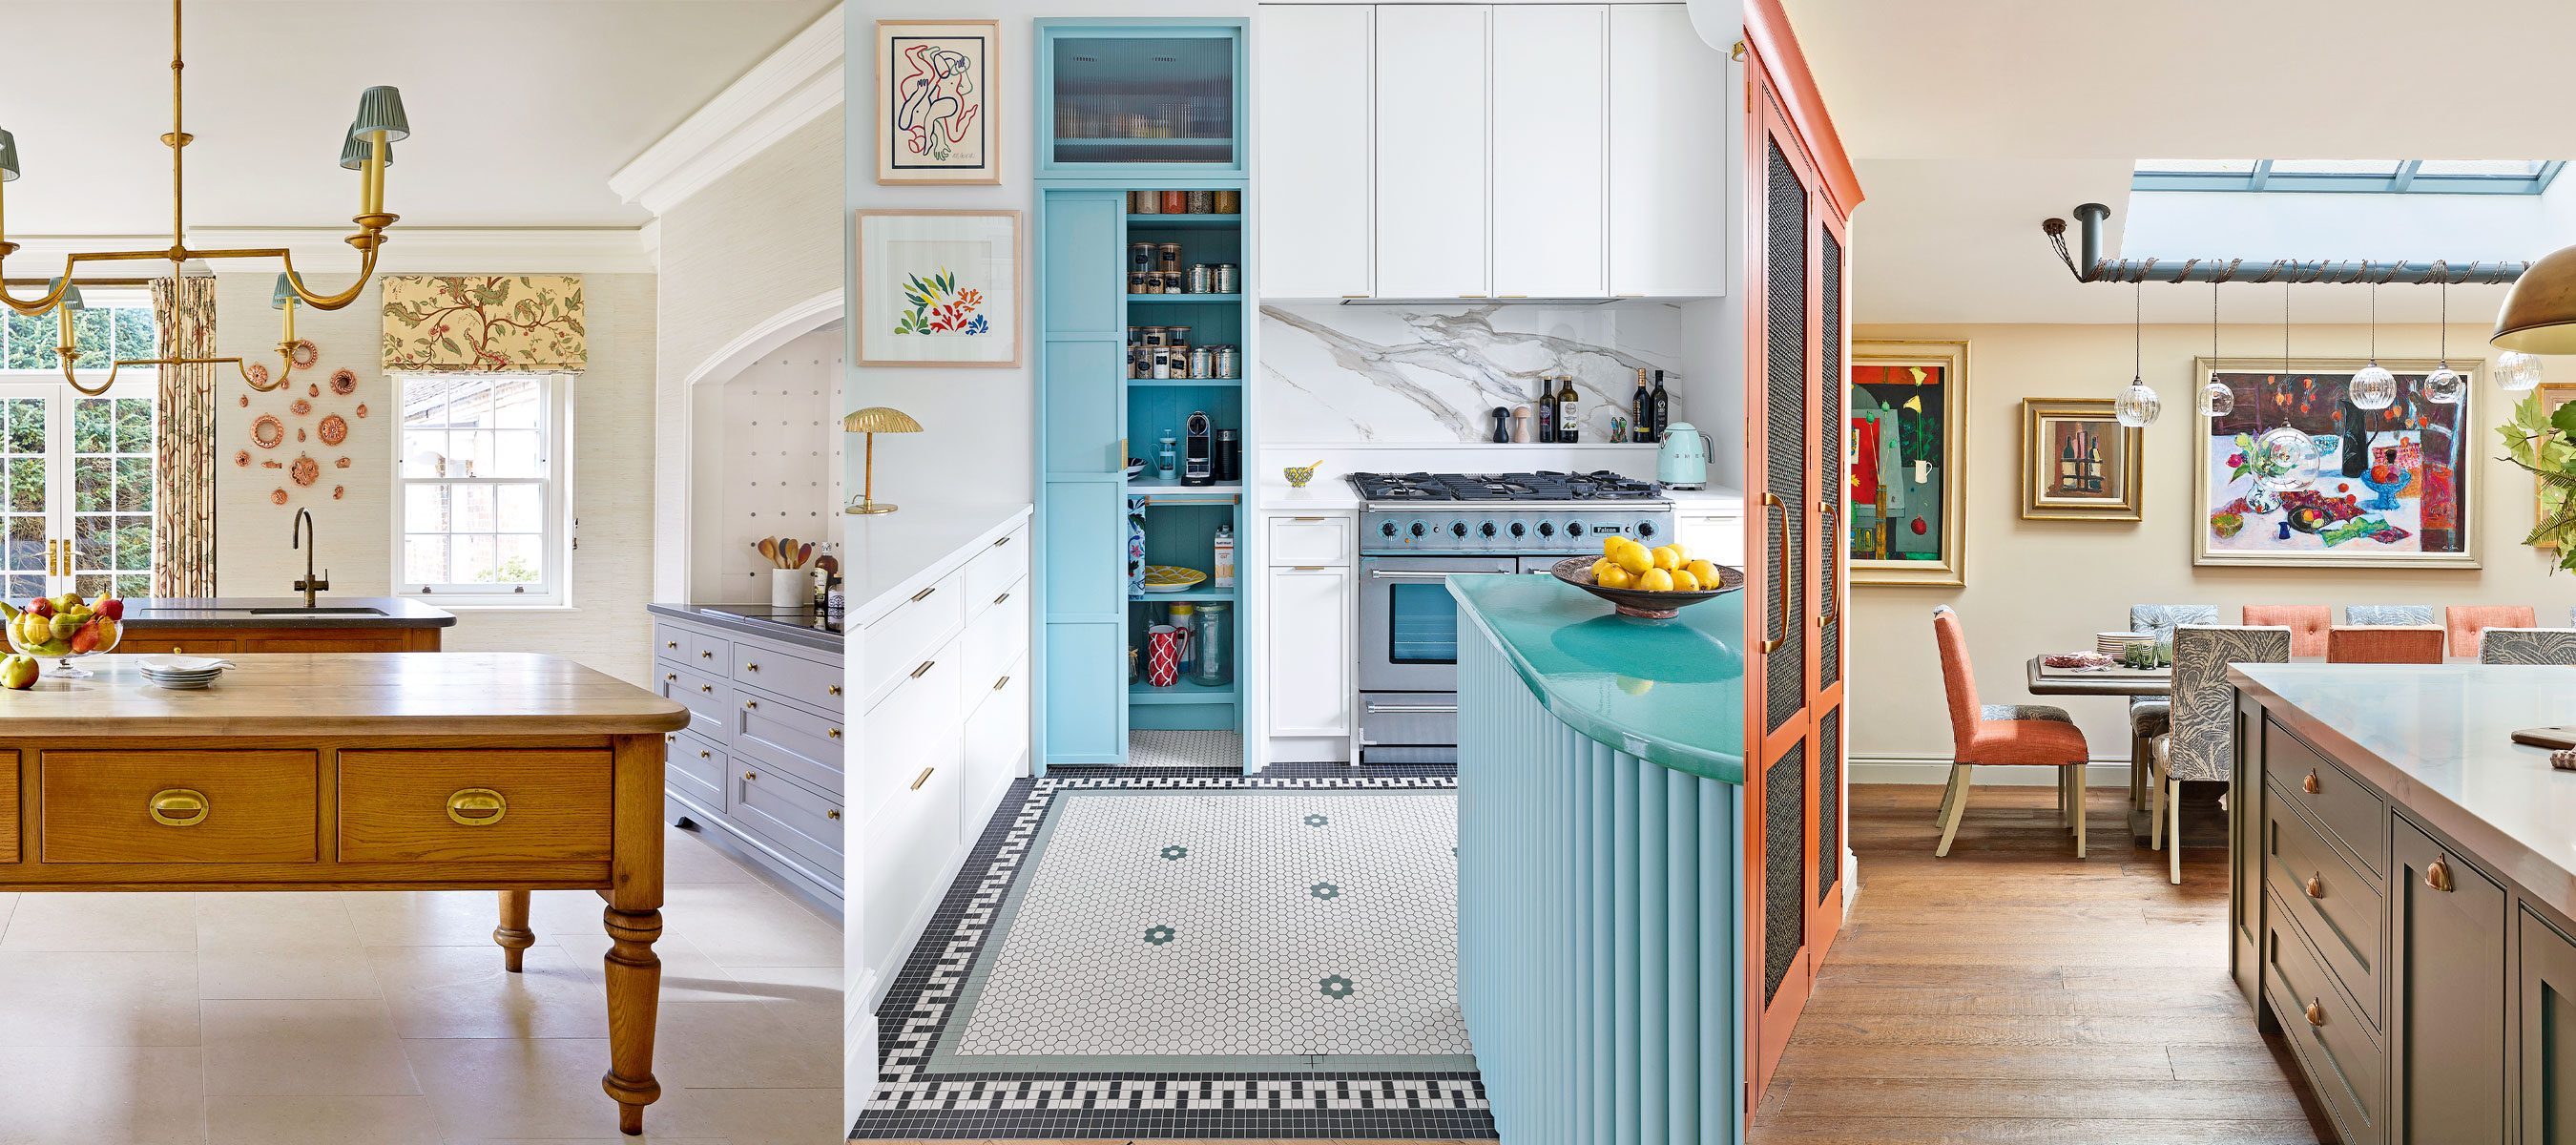 Decorative kitchen ideas 18 ways to curate a dream kitchen ...